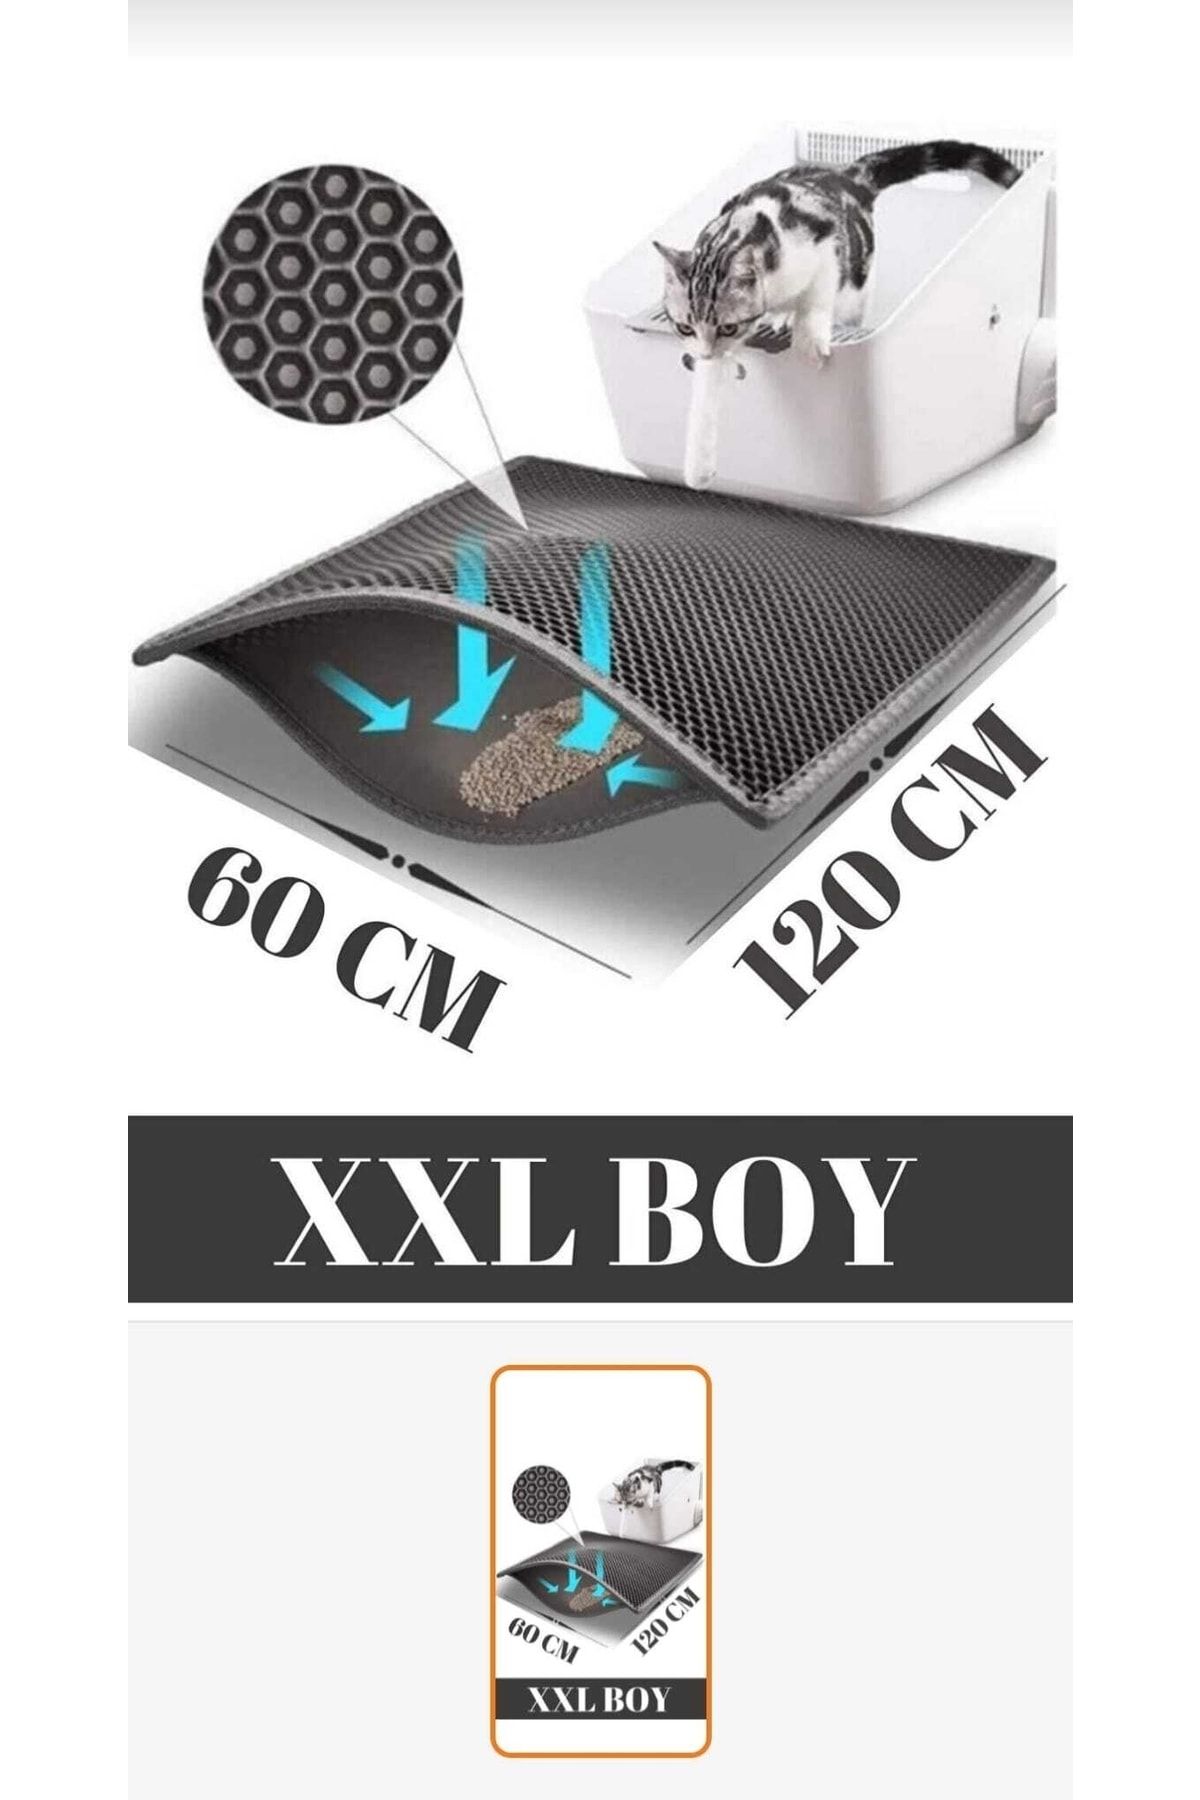 Bio Cat's Xxl Boy Elekli Kedi Kumu Paspası 120 X 60 Cm